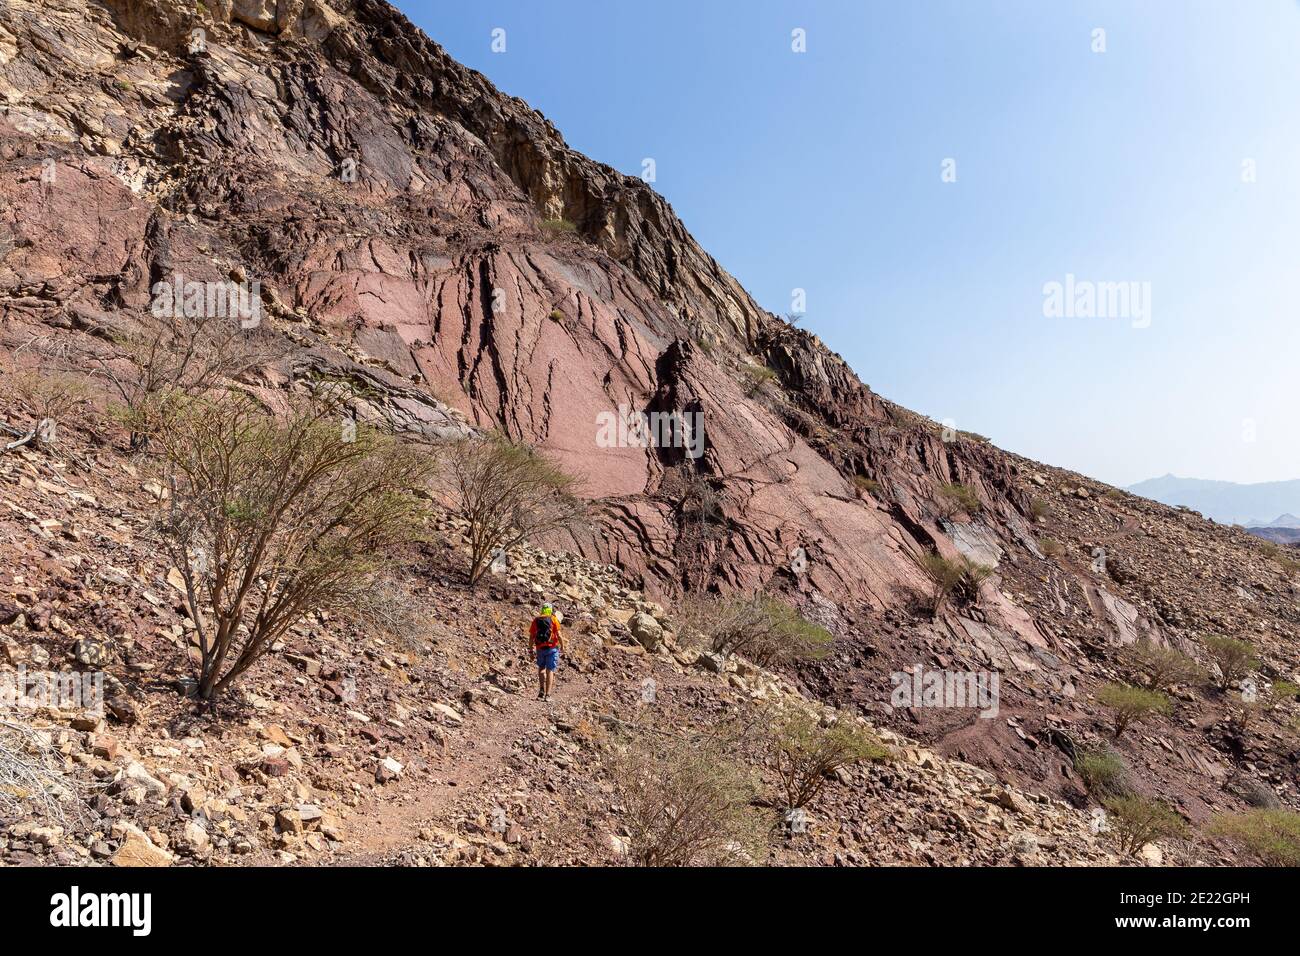 Male tourist hiking on rocky trail in Hatta, Hajar Mountains, United Arab Emirates. Limestone and dolomite rocks with barren acacia trees. Stock Photo